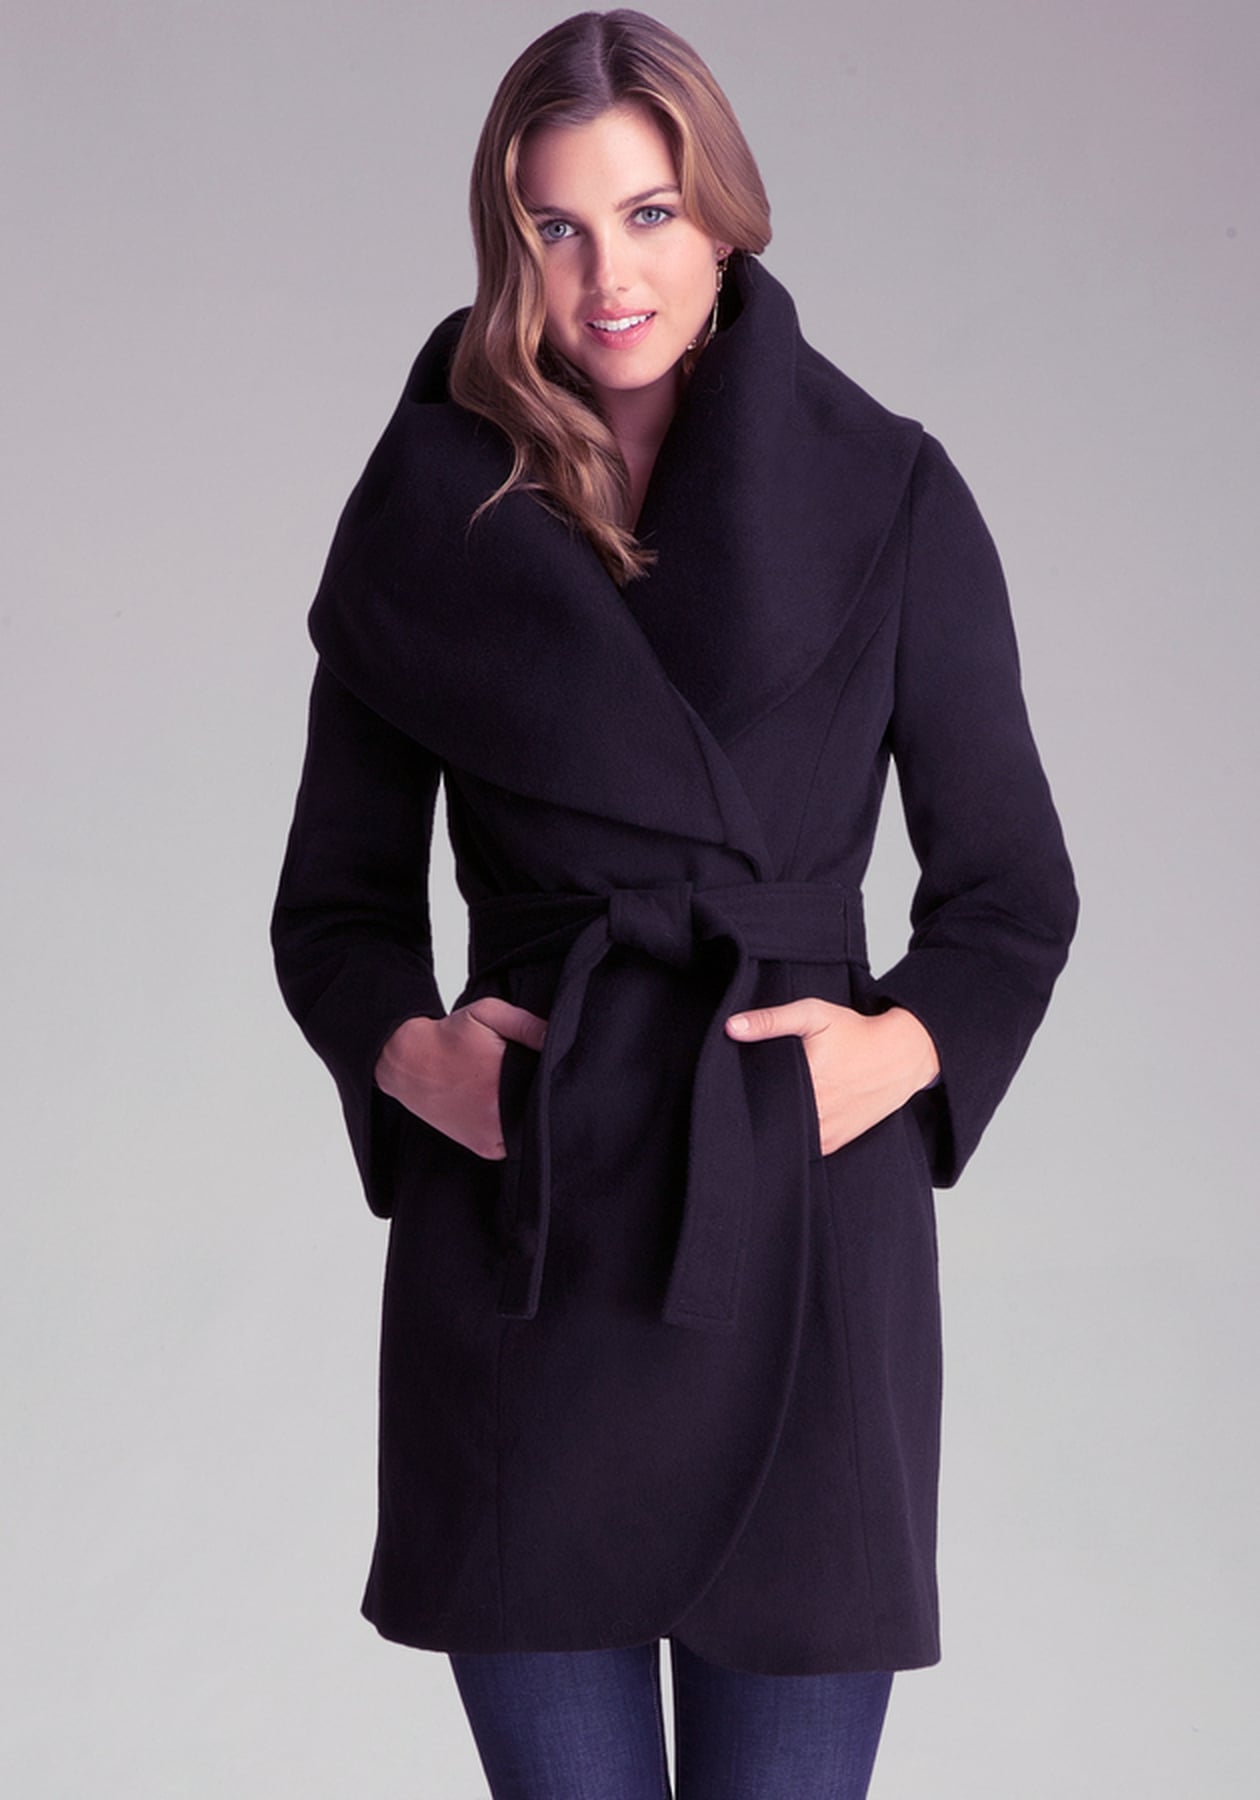 Fall Coat Trends 2014 | POPSUGAR Fashion